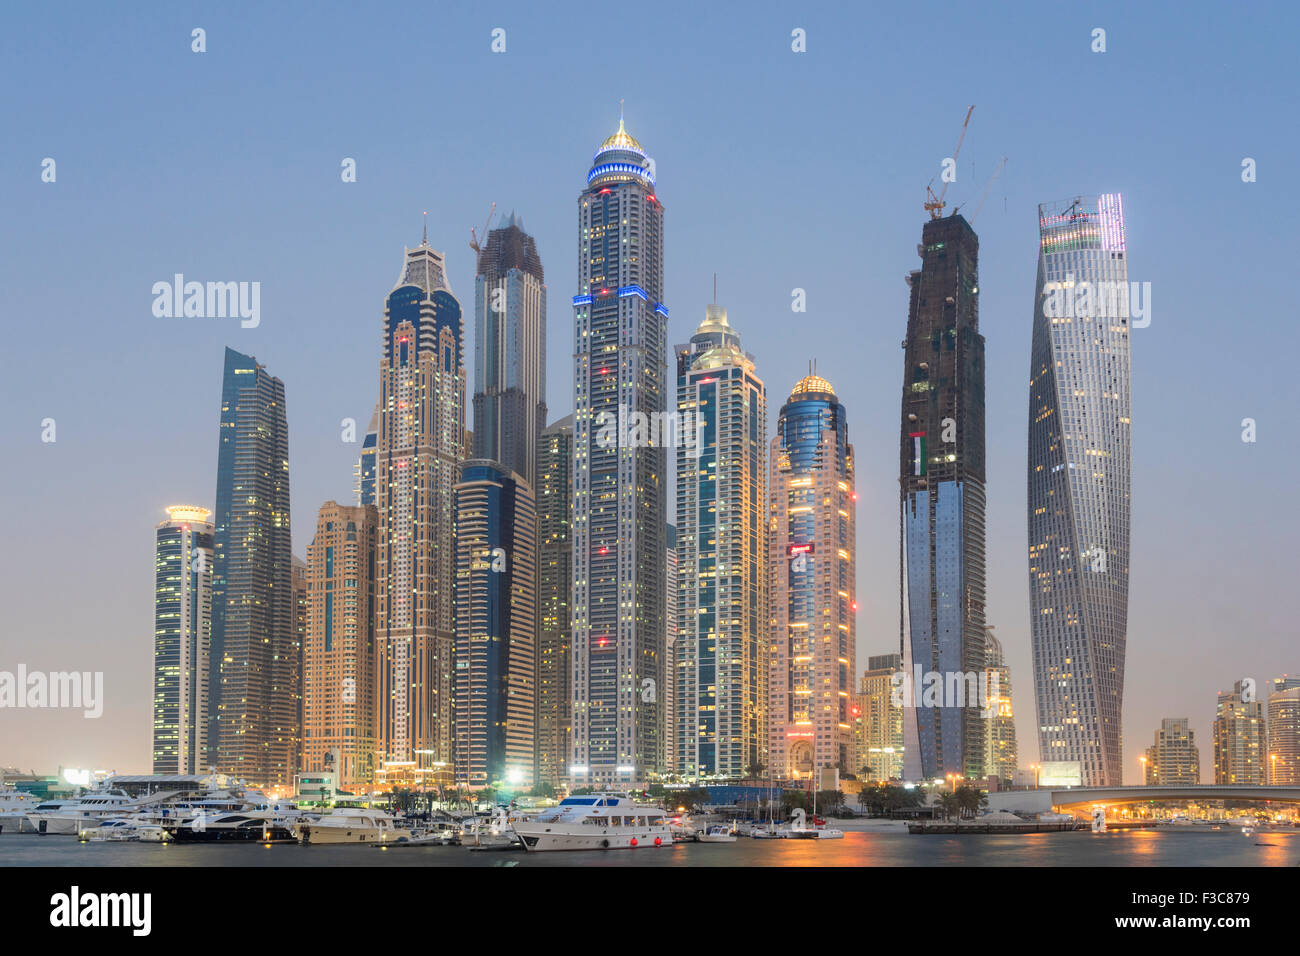 Skyline of modern high-rise apartment towers in Dubai united Arab Emirates Stock Photo